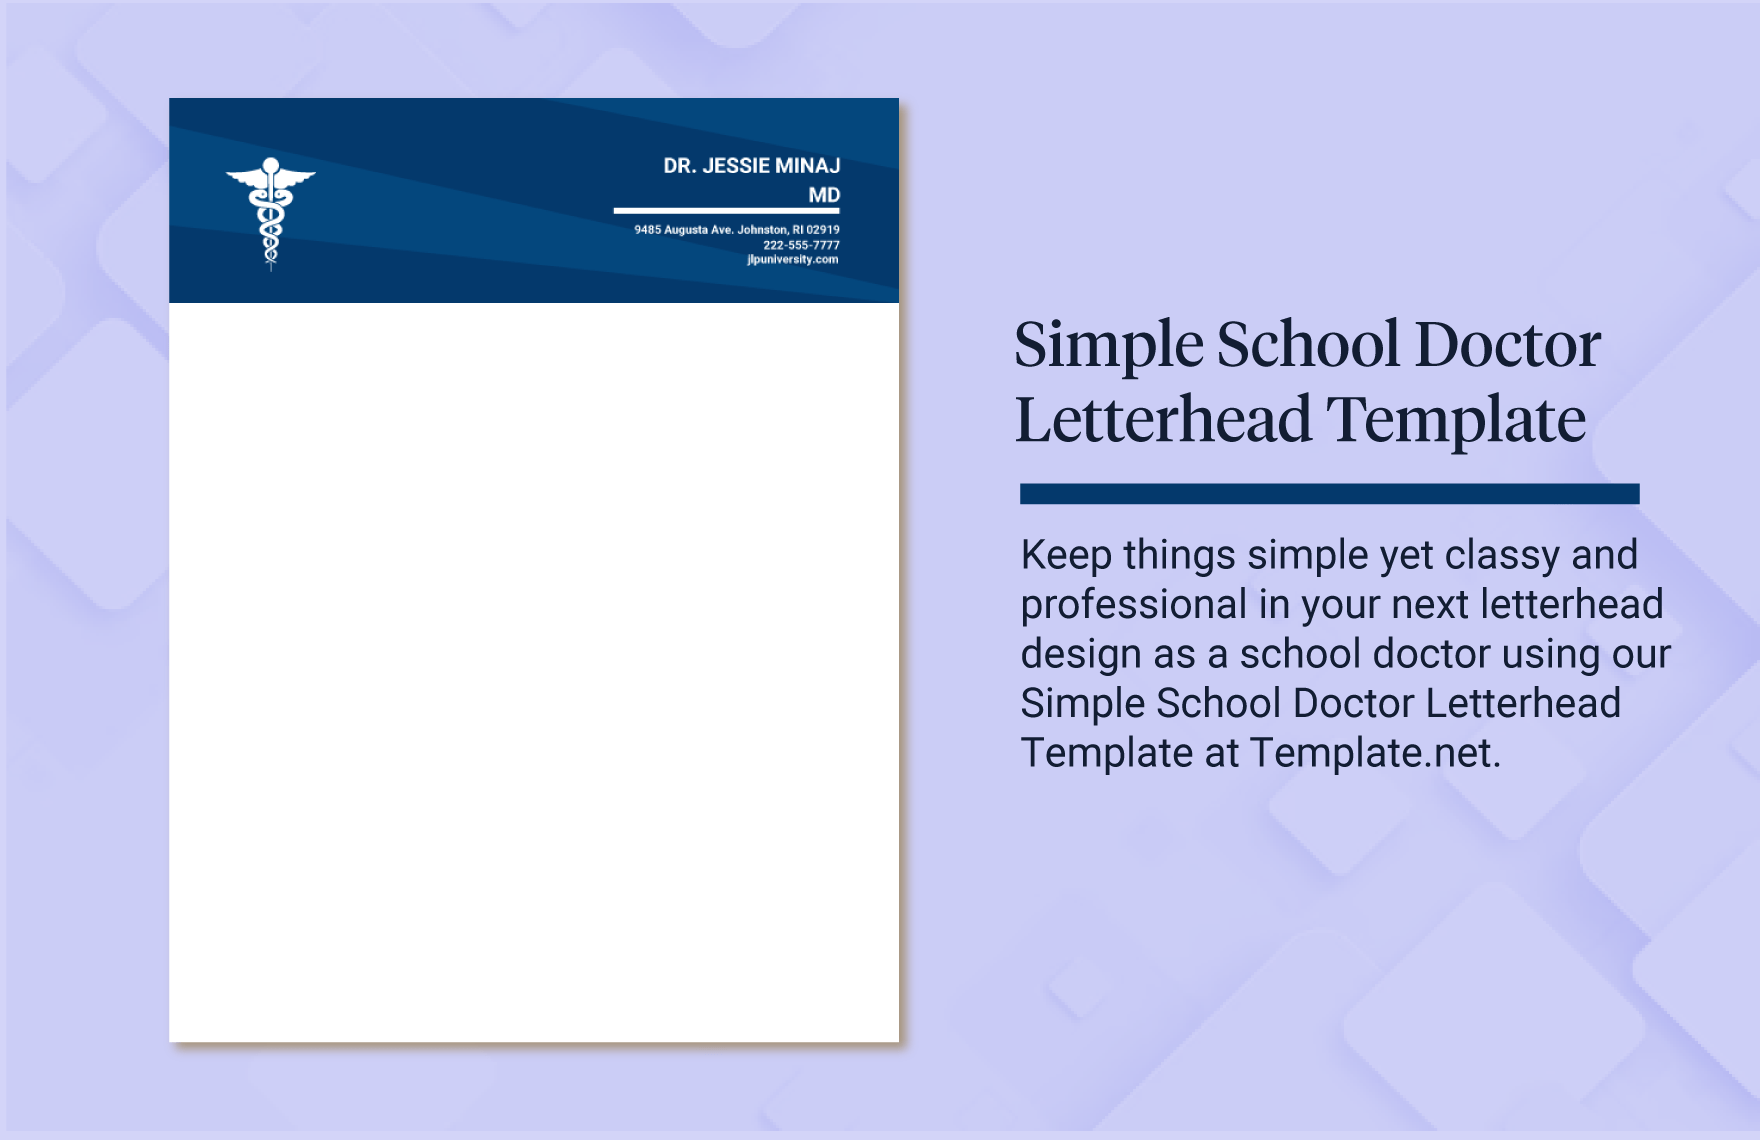 Simple School Doctor Letterhead Template